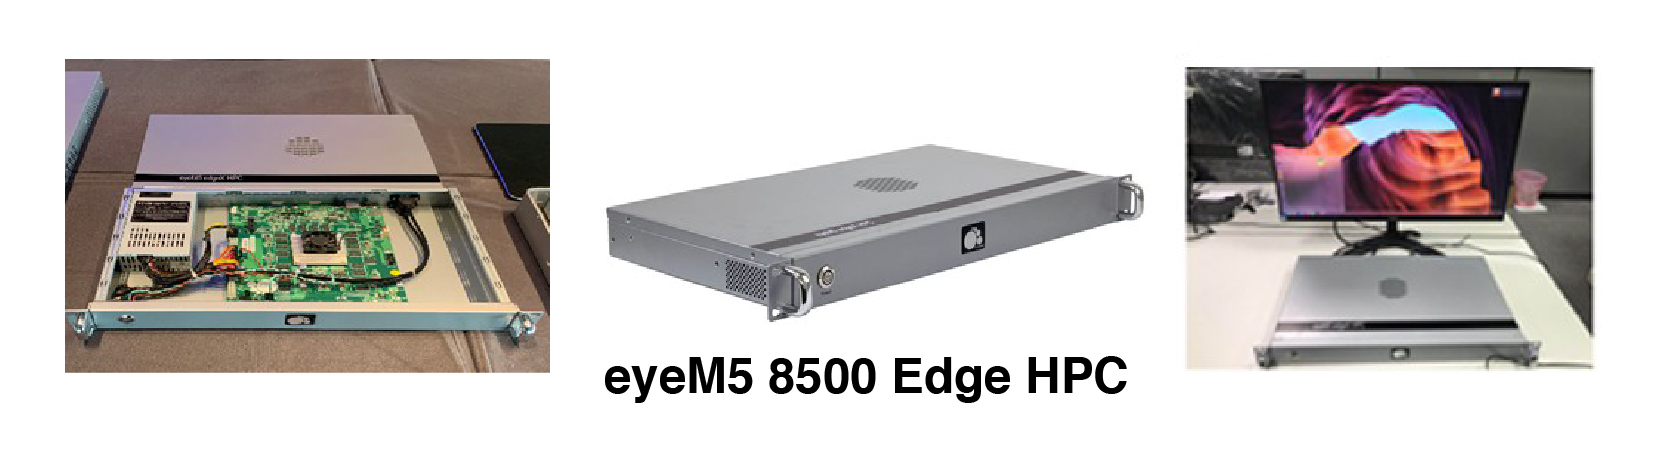 eyeM5 8500 edgeX HPC 人工智能边缘运算器